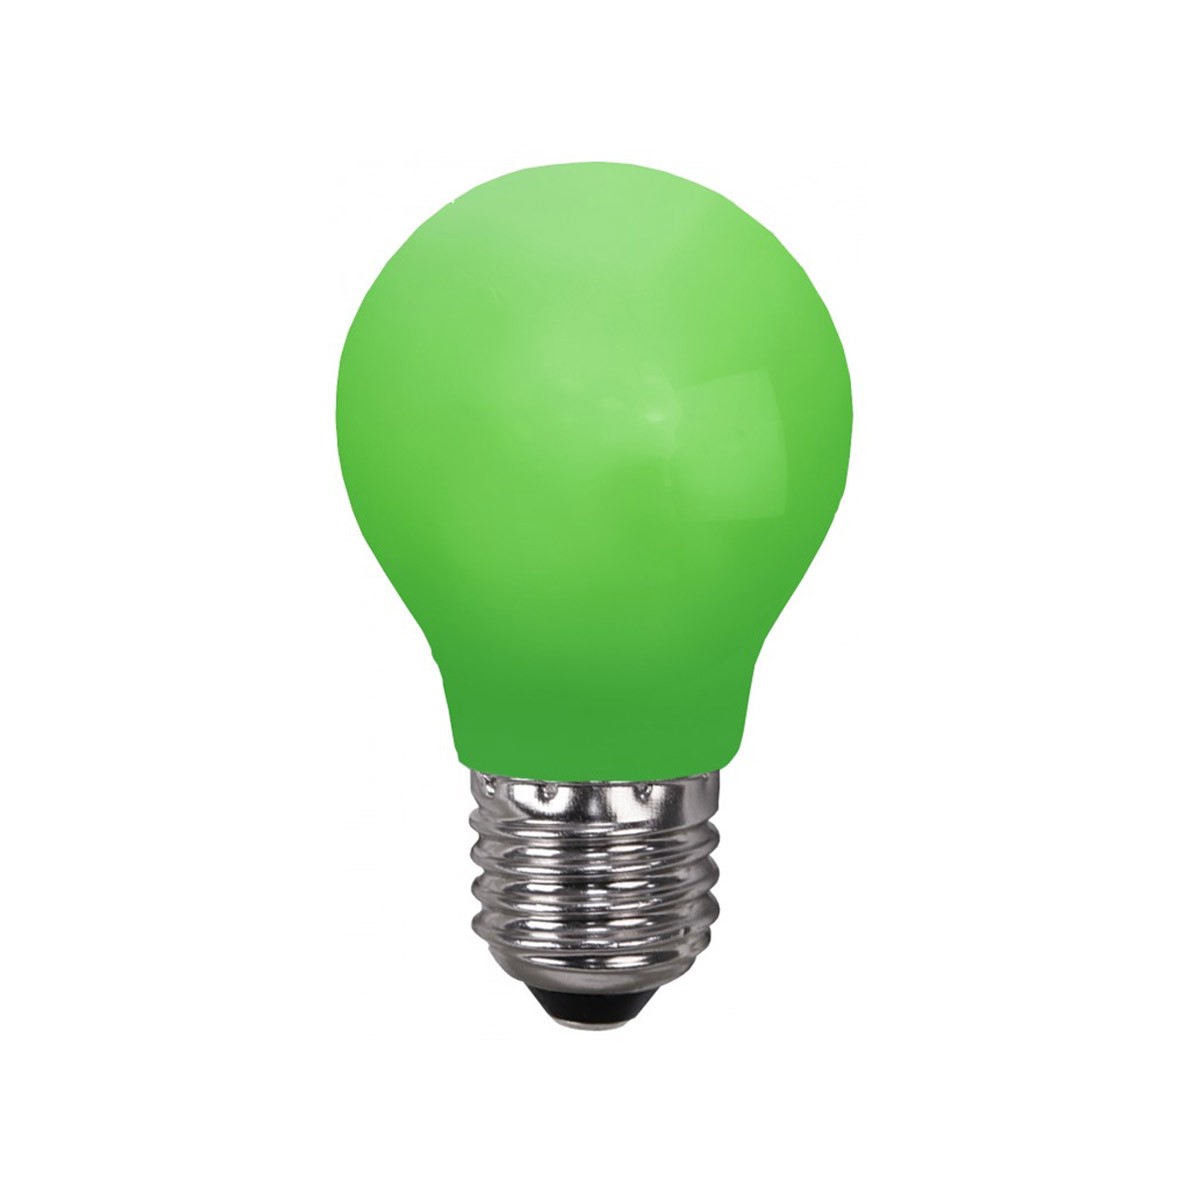 LED Leuchtmittel DEKOPARTY grün – E27 – 0,9W LED – schlagfestes Pol…